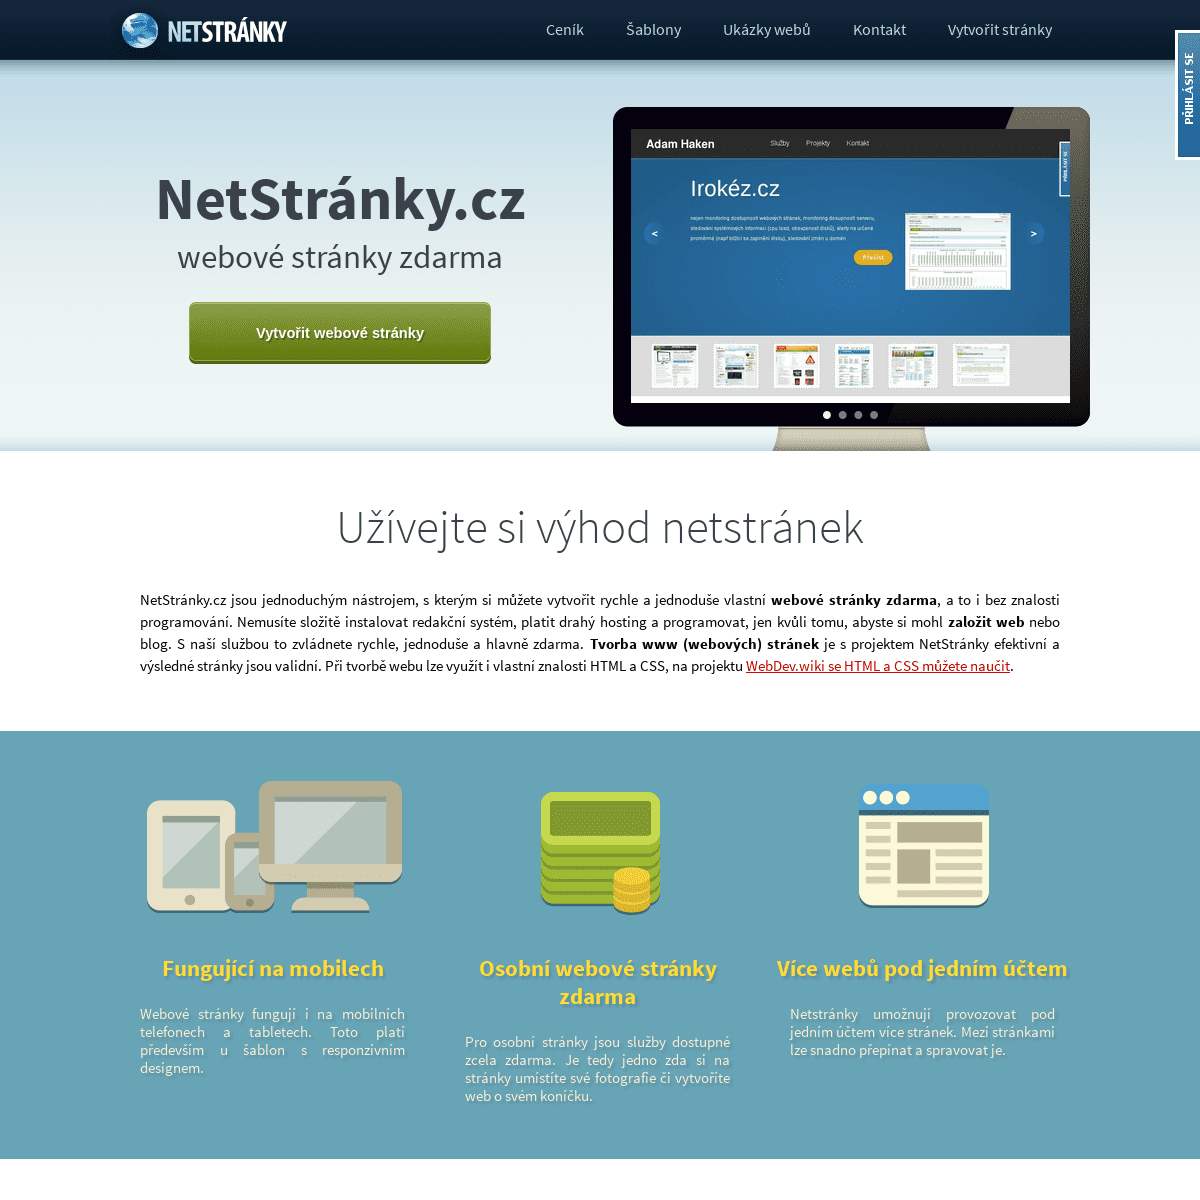 A complete backup of netstranky.cz